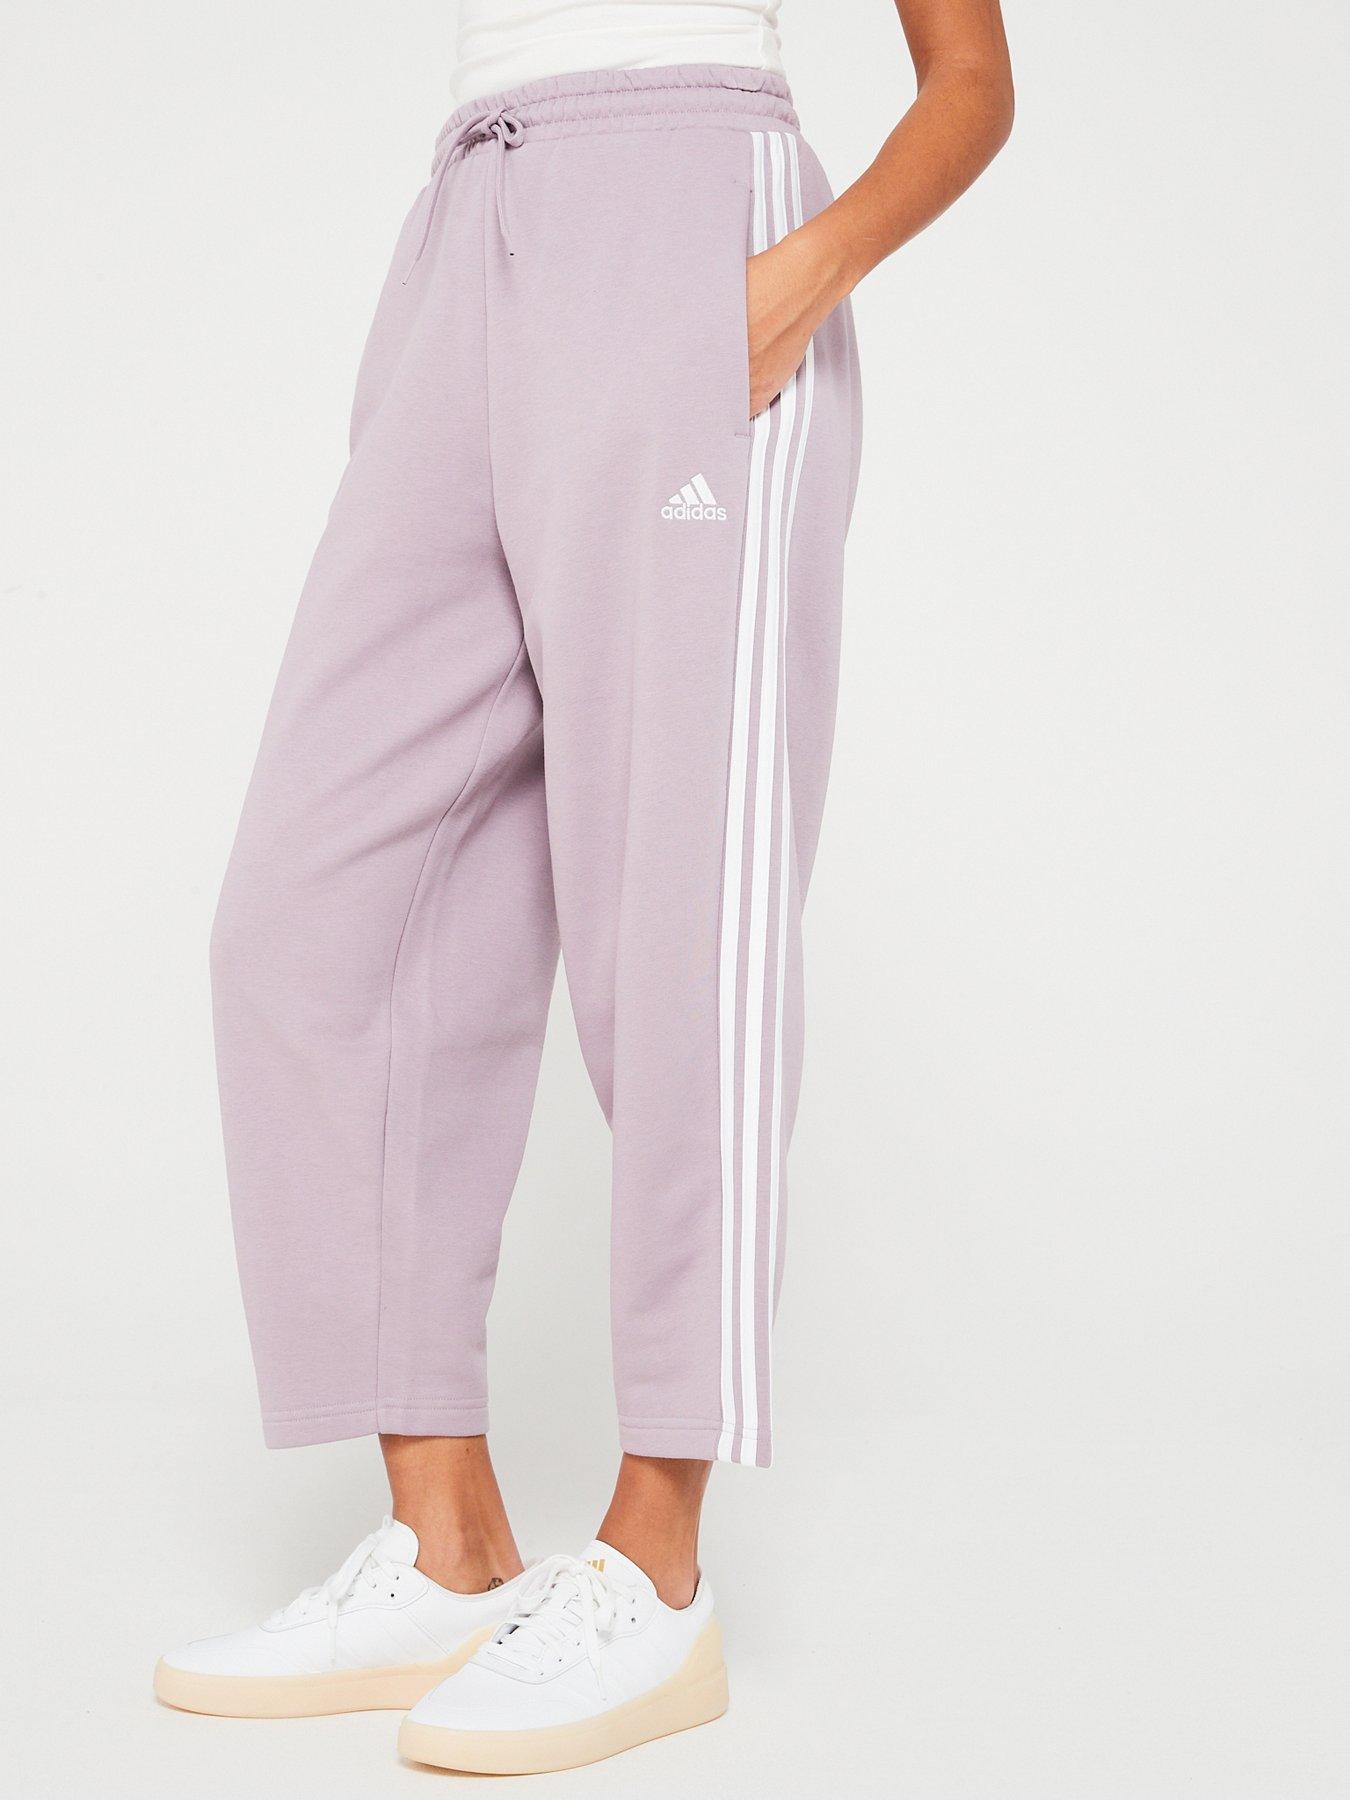 Adidas Originals 3 Stripes Leggings in Trace Maroon Pink - $26 (35